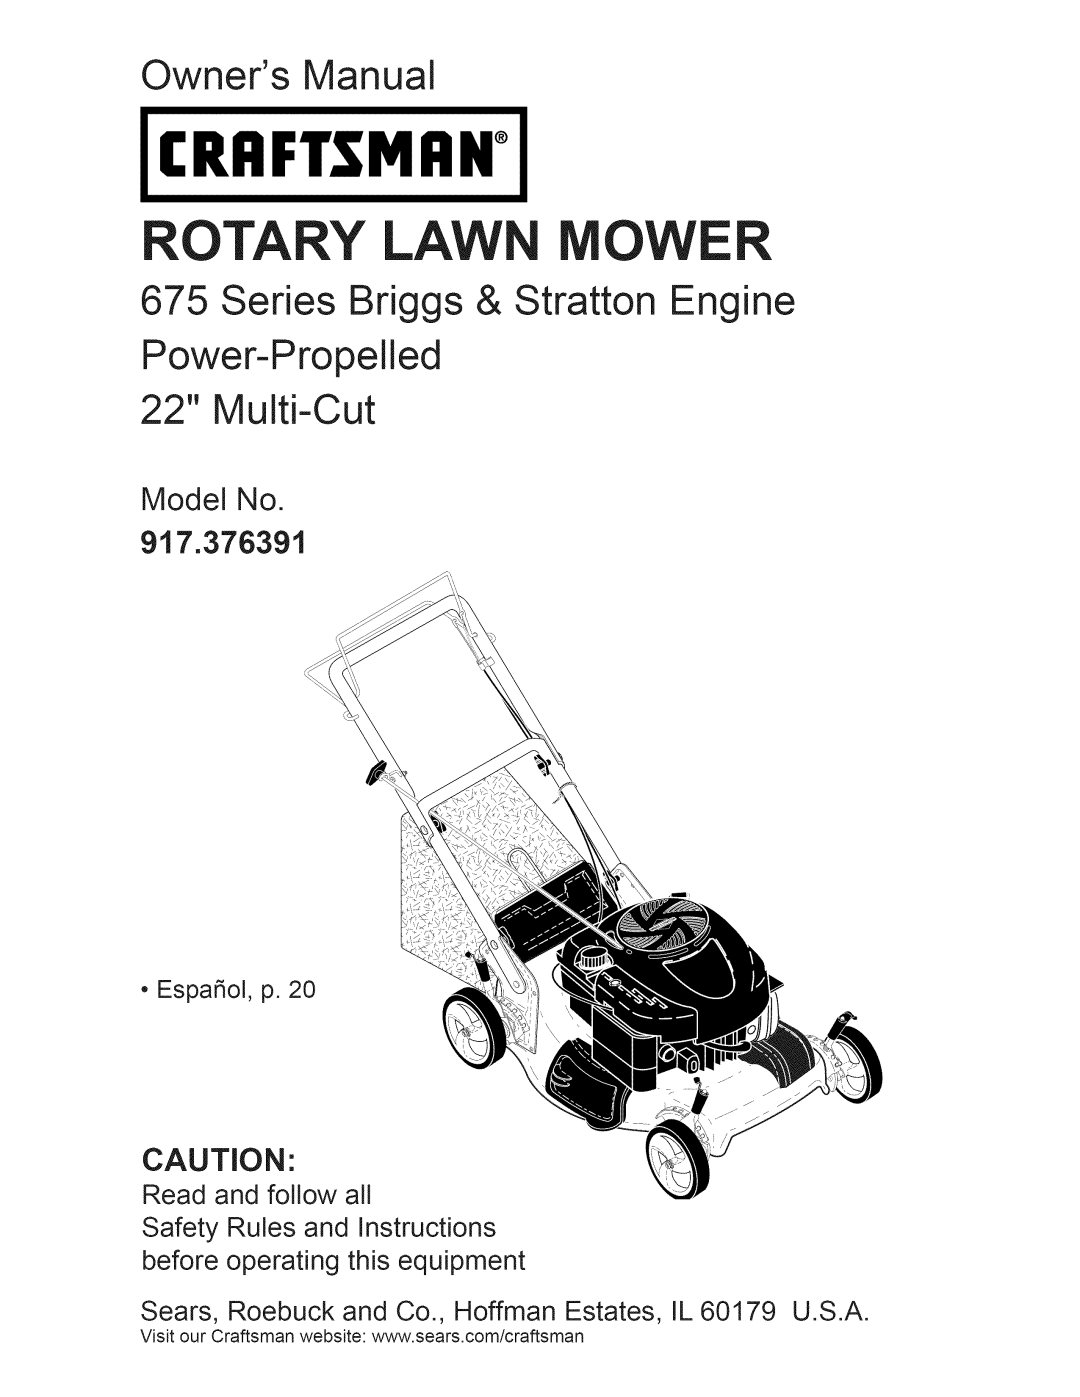 Craftsman owner manual Model No 917.376391, Craftsman, Rotary Lawn Mower, Series Briggs & Stratton Engine 